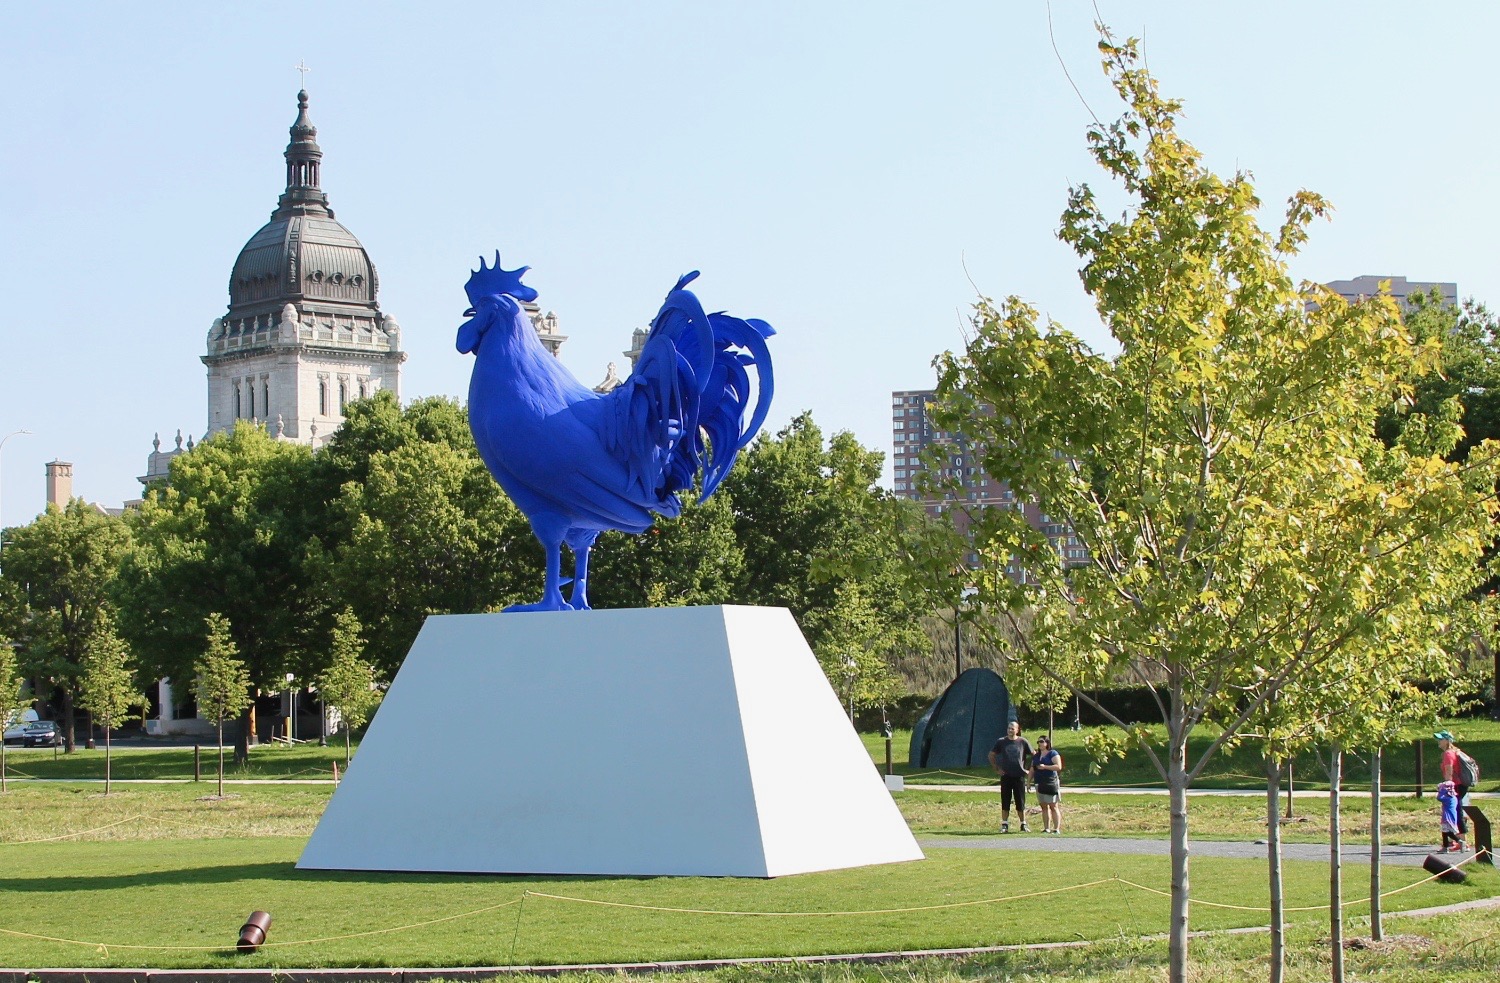 Rooster sculpture at the Minneapolis sculpture garden